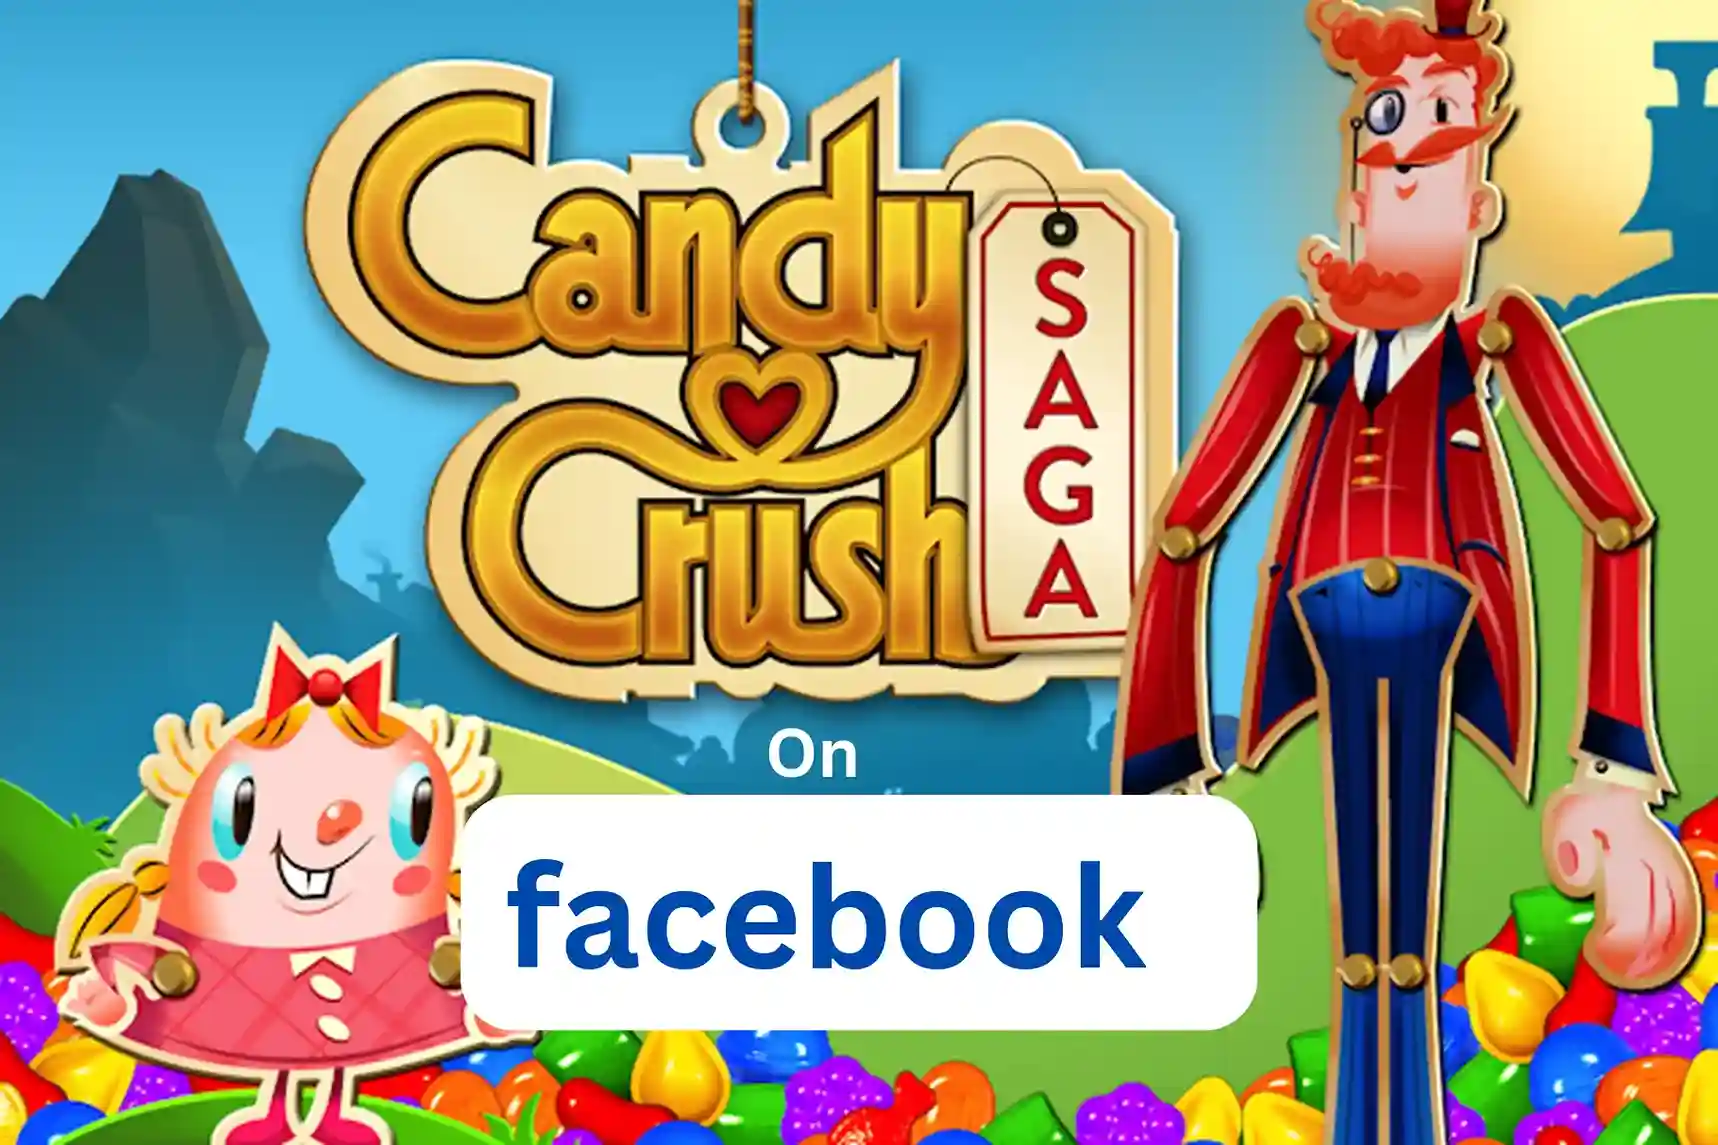 candy crush saga apk